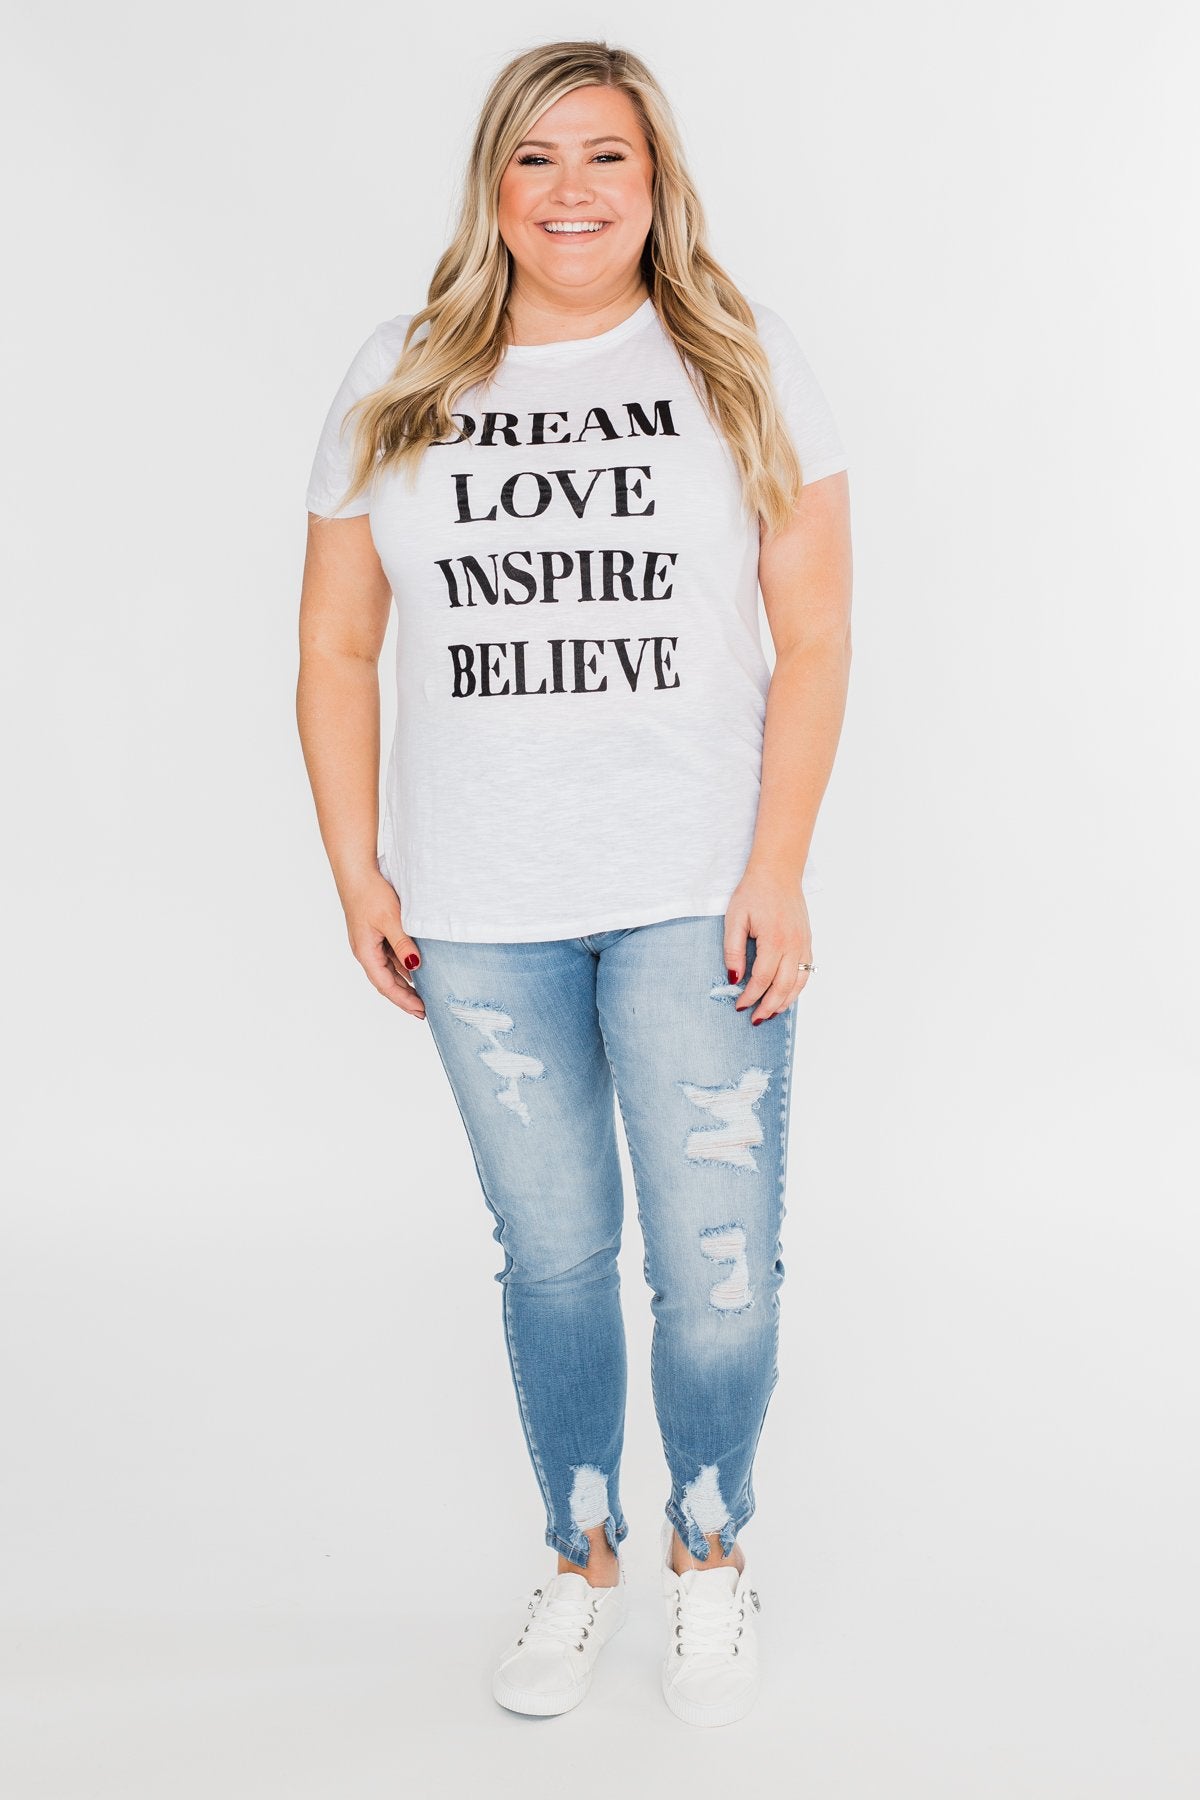 Dream, Love, Inspire, Believe Graphic Tee- White